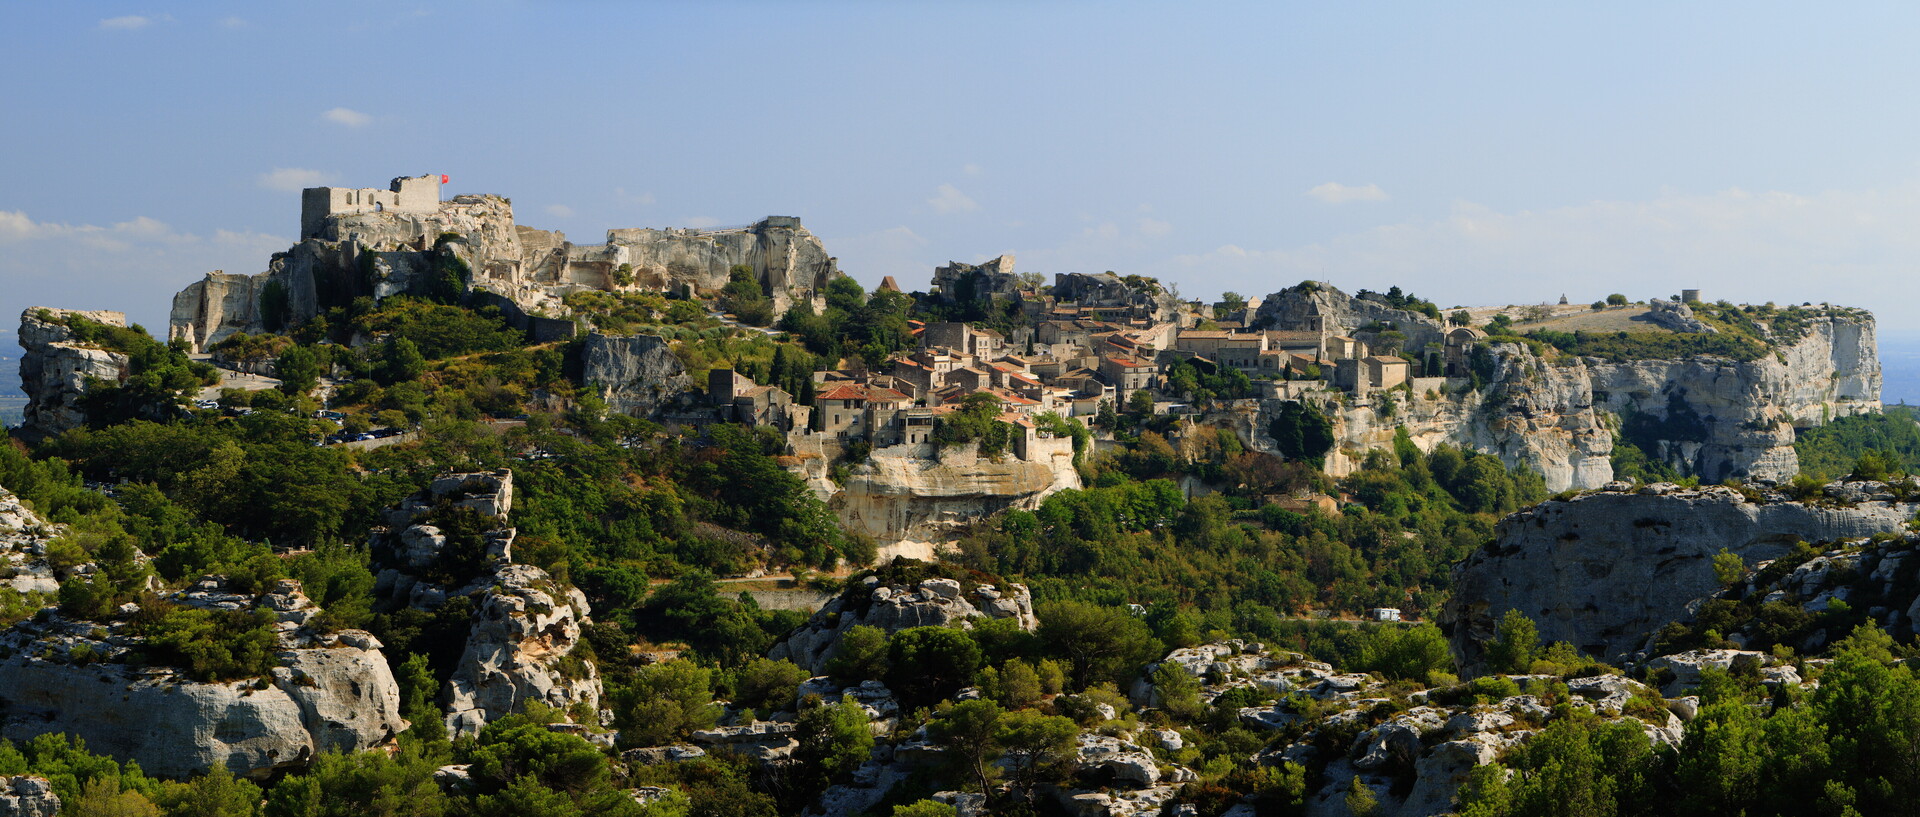 Village: "Les Baux de Provence". There is a castle ruin to be seen.